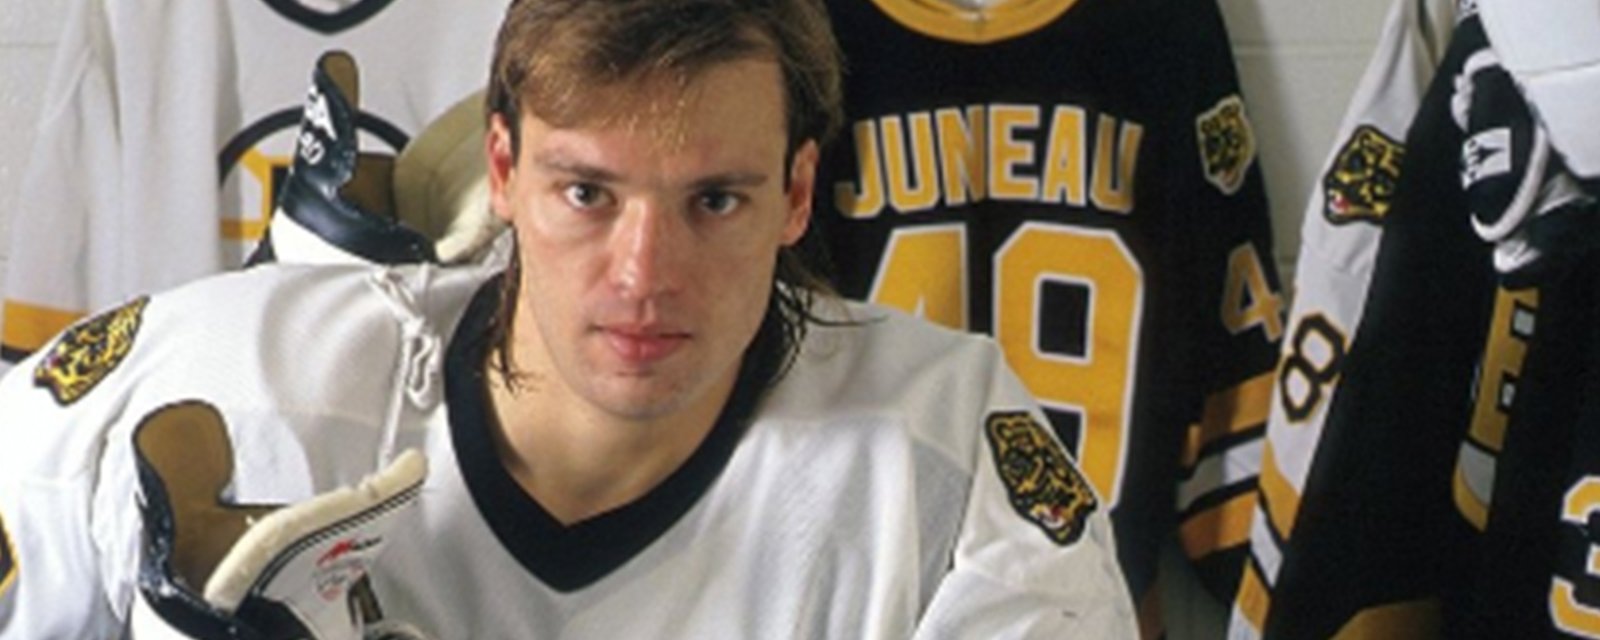 Former NHL star Joe Juneau suffers terrible tragedy